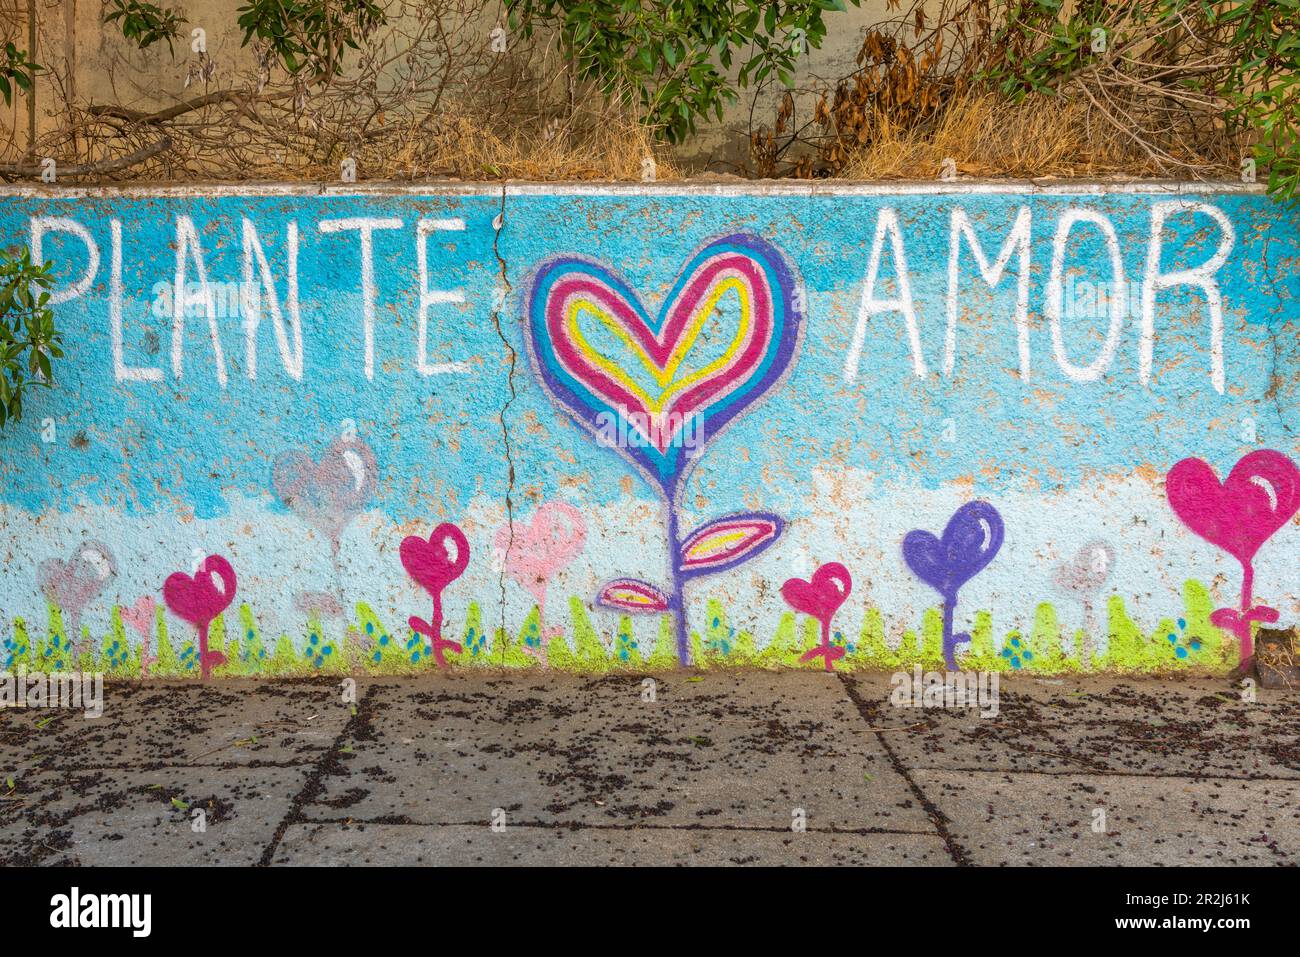 Painted mural with text saying Plante amor (Plant love) and heart at Cerro La Florida, Valparaiso, Valparaiso Province, Valparaiso Region, Chile Stock Photo